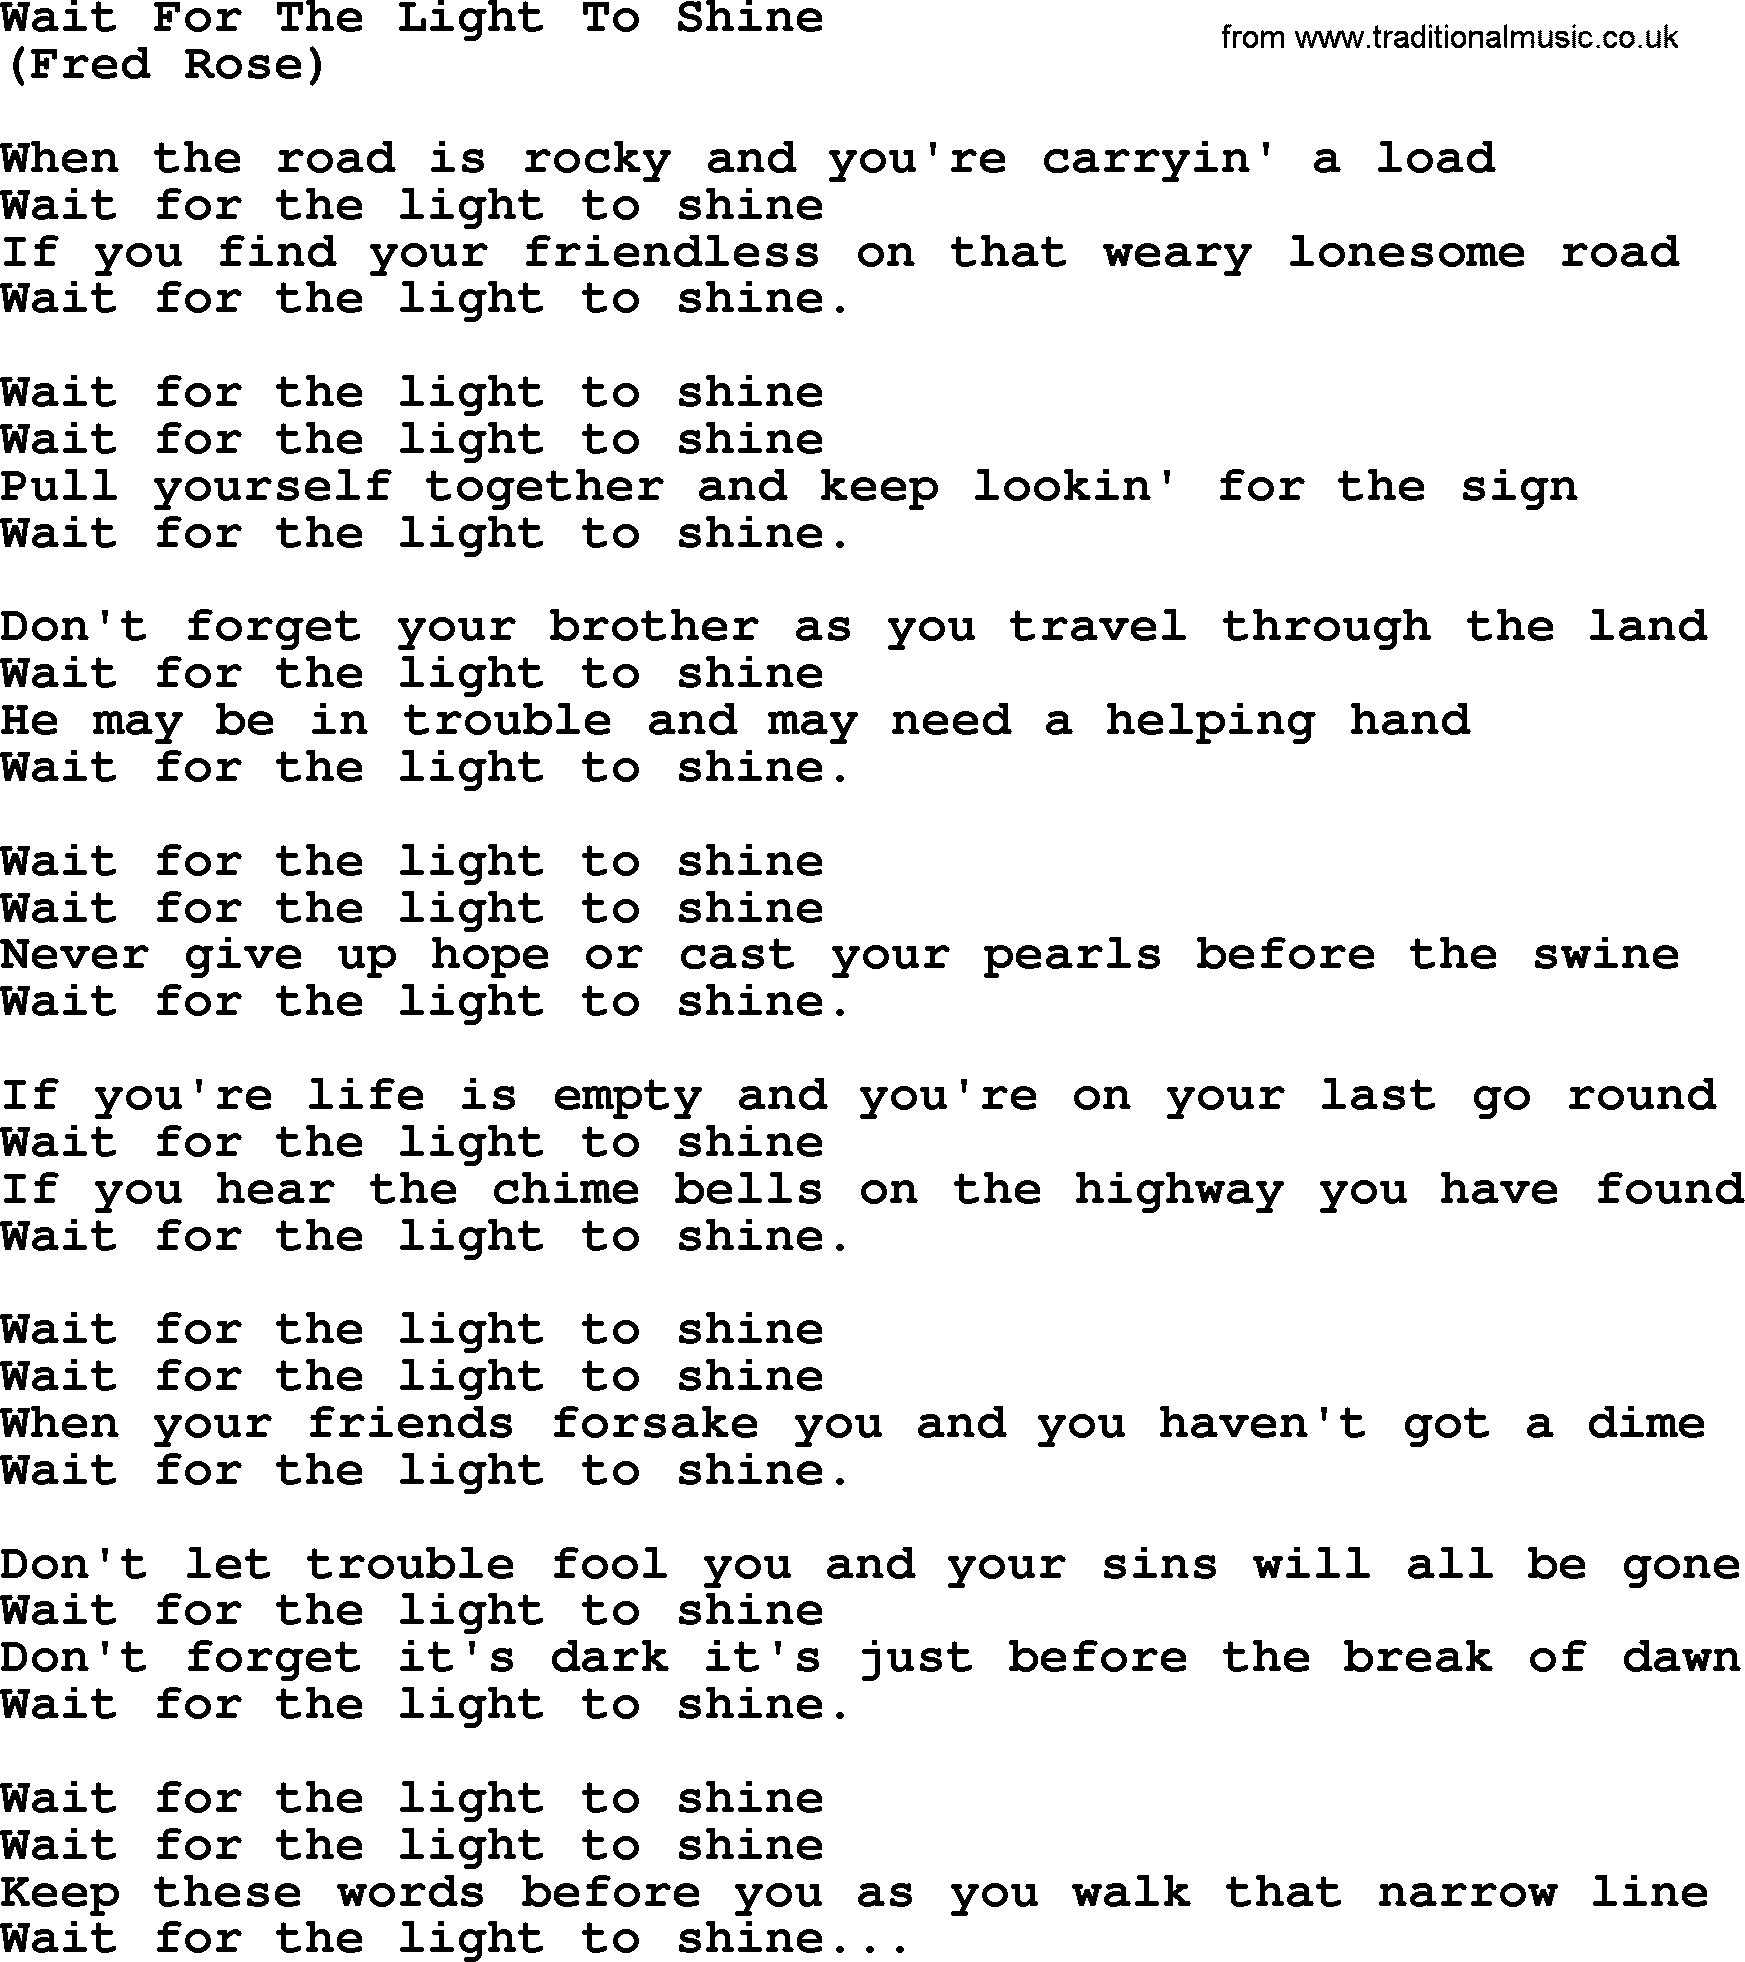 Hank Williams song Wait For The Light To Shine, lyrics